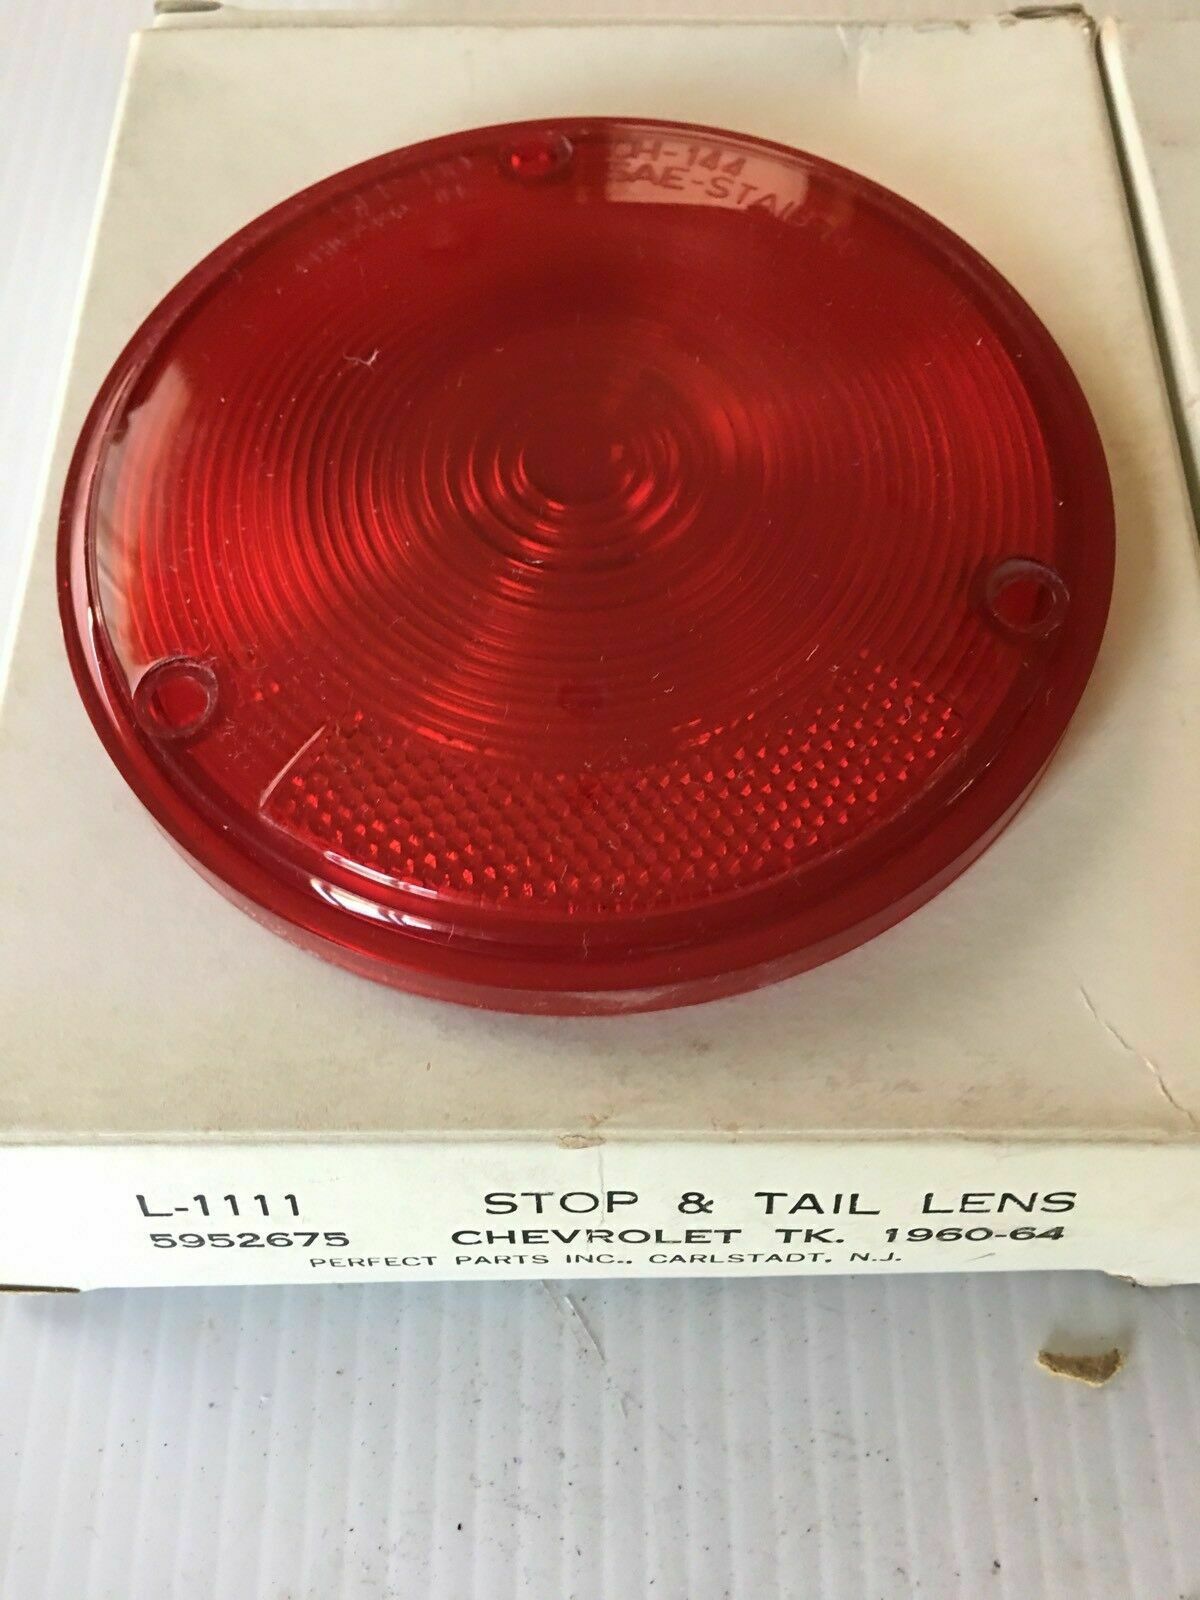 Tail Light Assemblies: GM/CHEVY NORS 5952675 Tail Light Lens L-1111 1960-1964 Truck Pair (2) 5 Inc